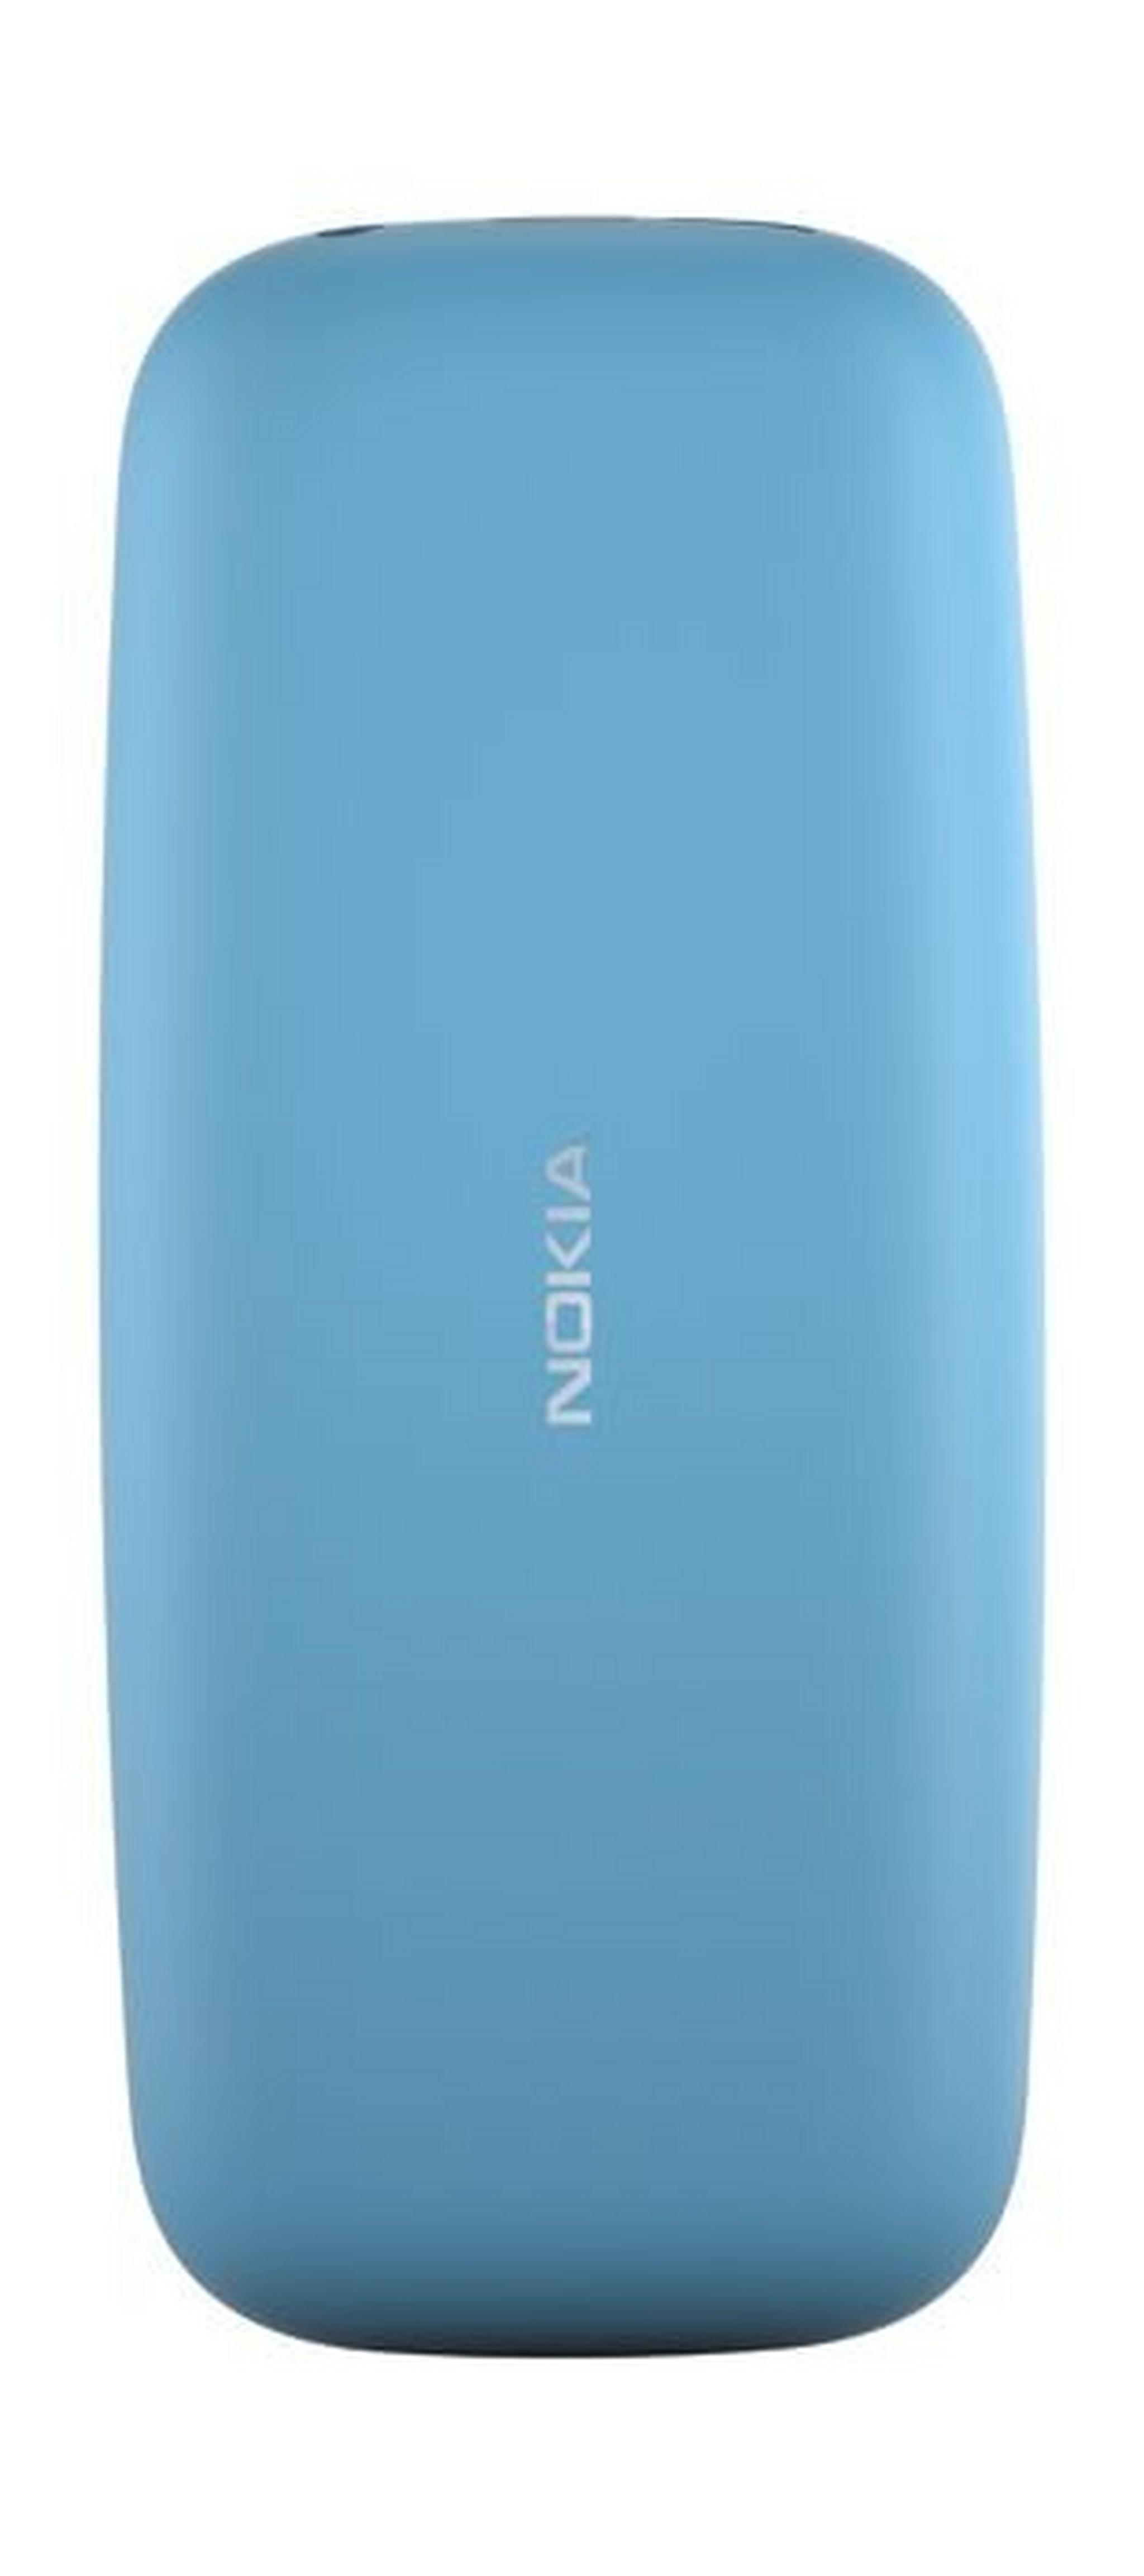 Nokia 105 4MB Dual Sim 1.8-inch Smartphone (DS TA-1034) – Blue